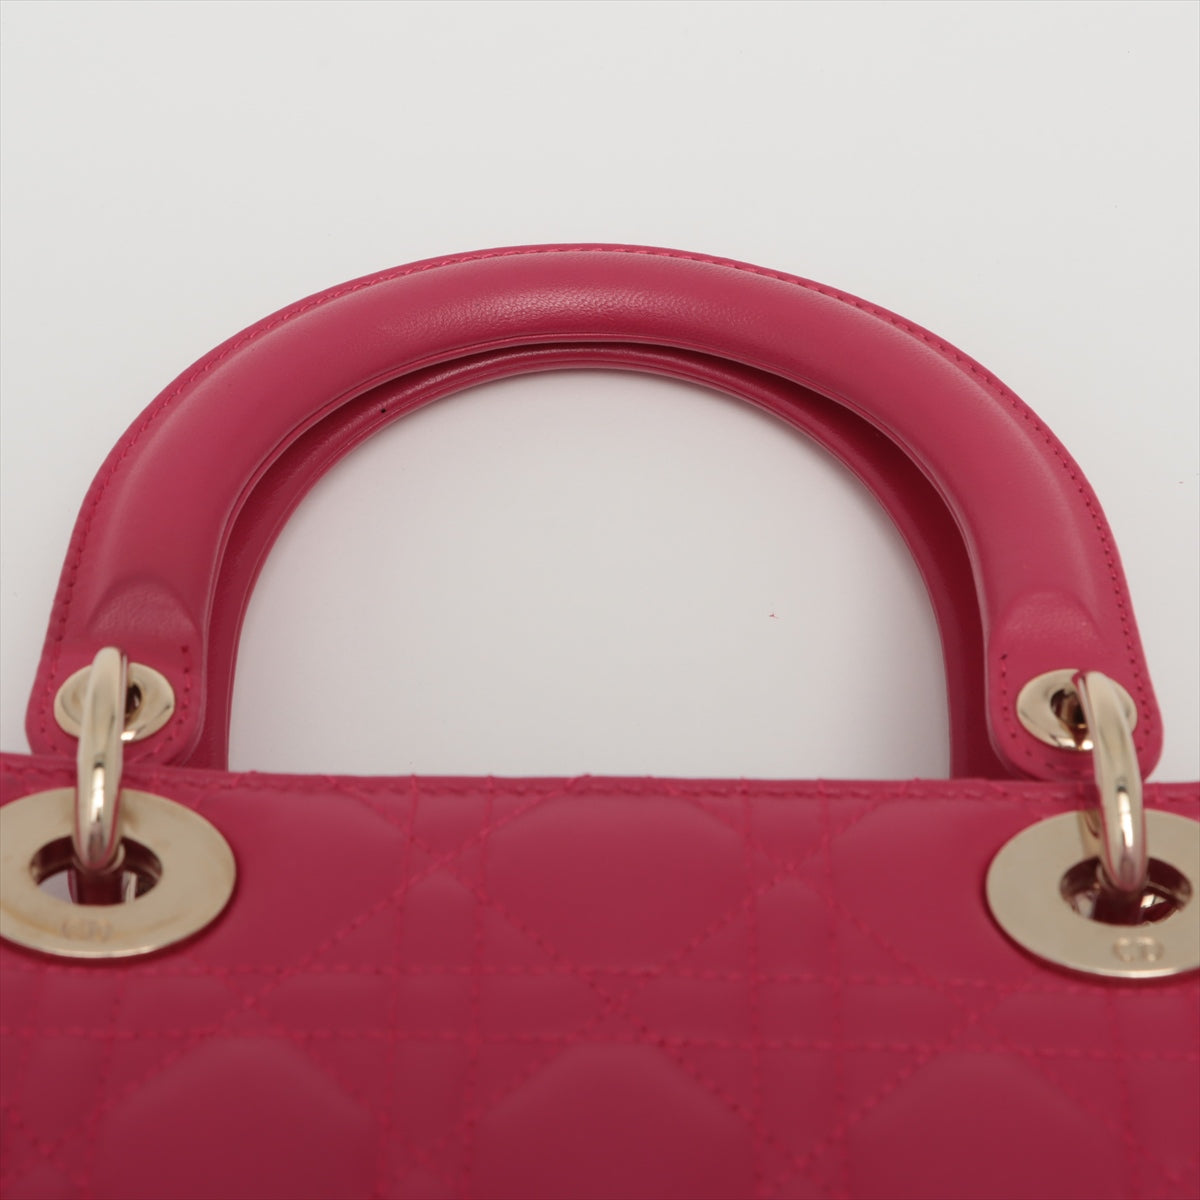 Christian Dior  Dior Lady Leather 2WAY Handbag Pink